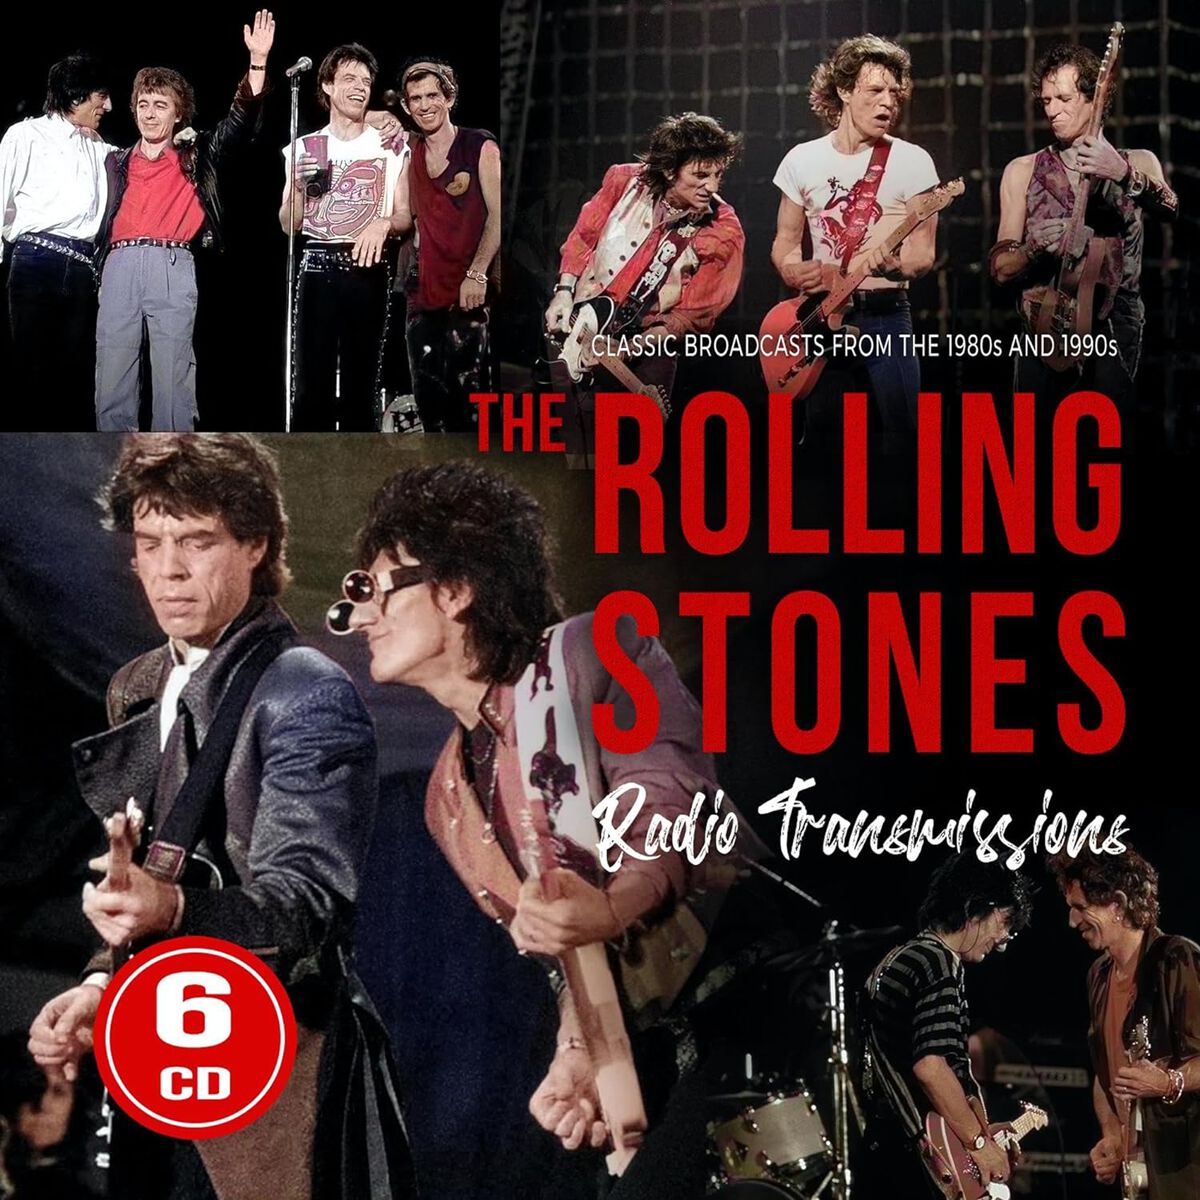 Radio transmissions von The Rolling Stones - 4-CD (Boxset)